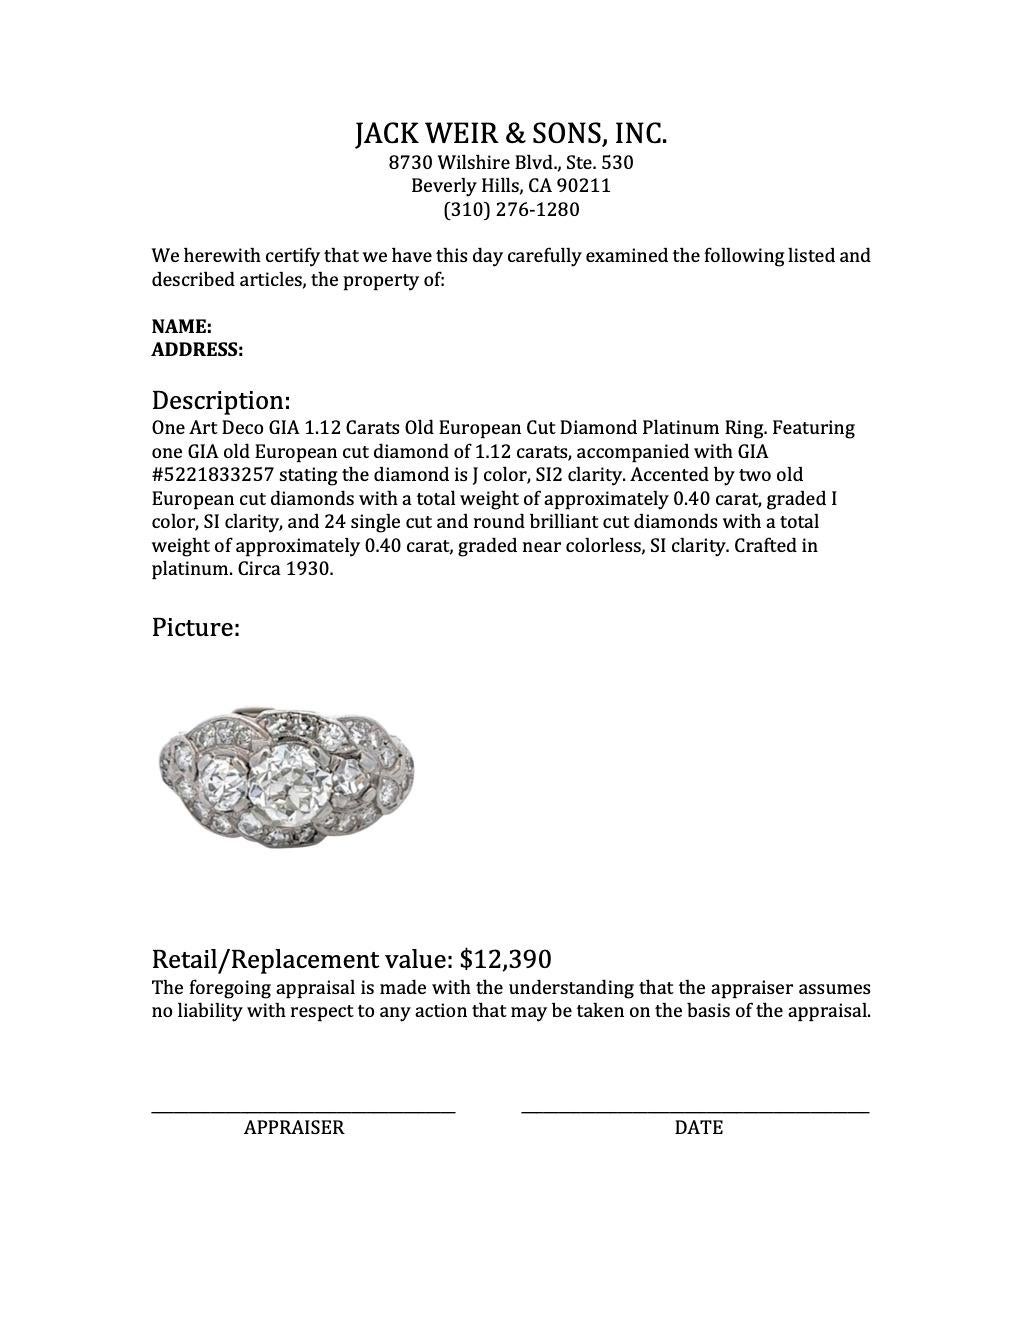 Art Deco GIA 1.12 Carats Old European Cut Diamond Platinum Ring 4